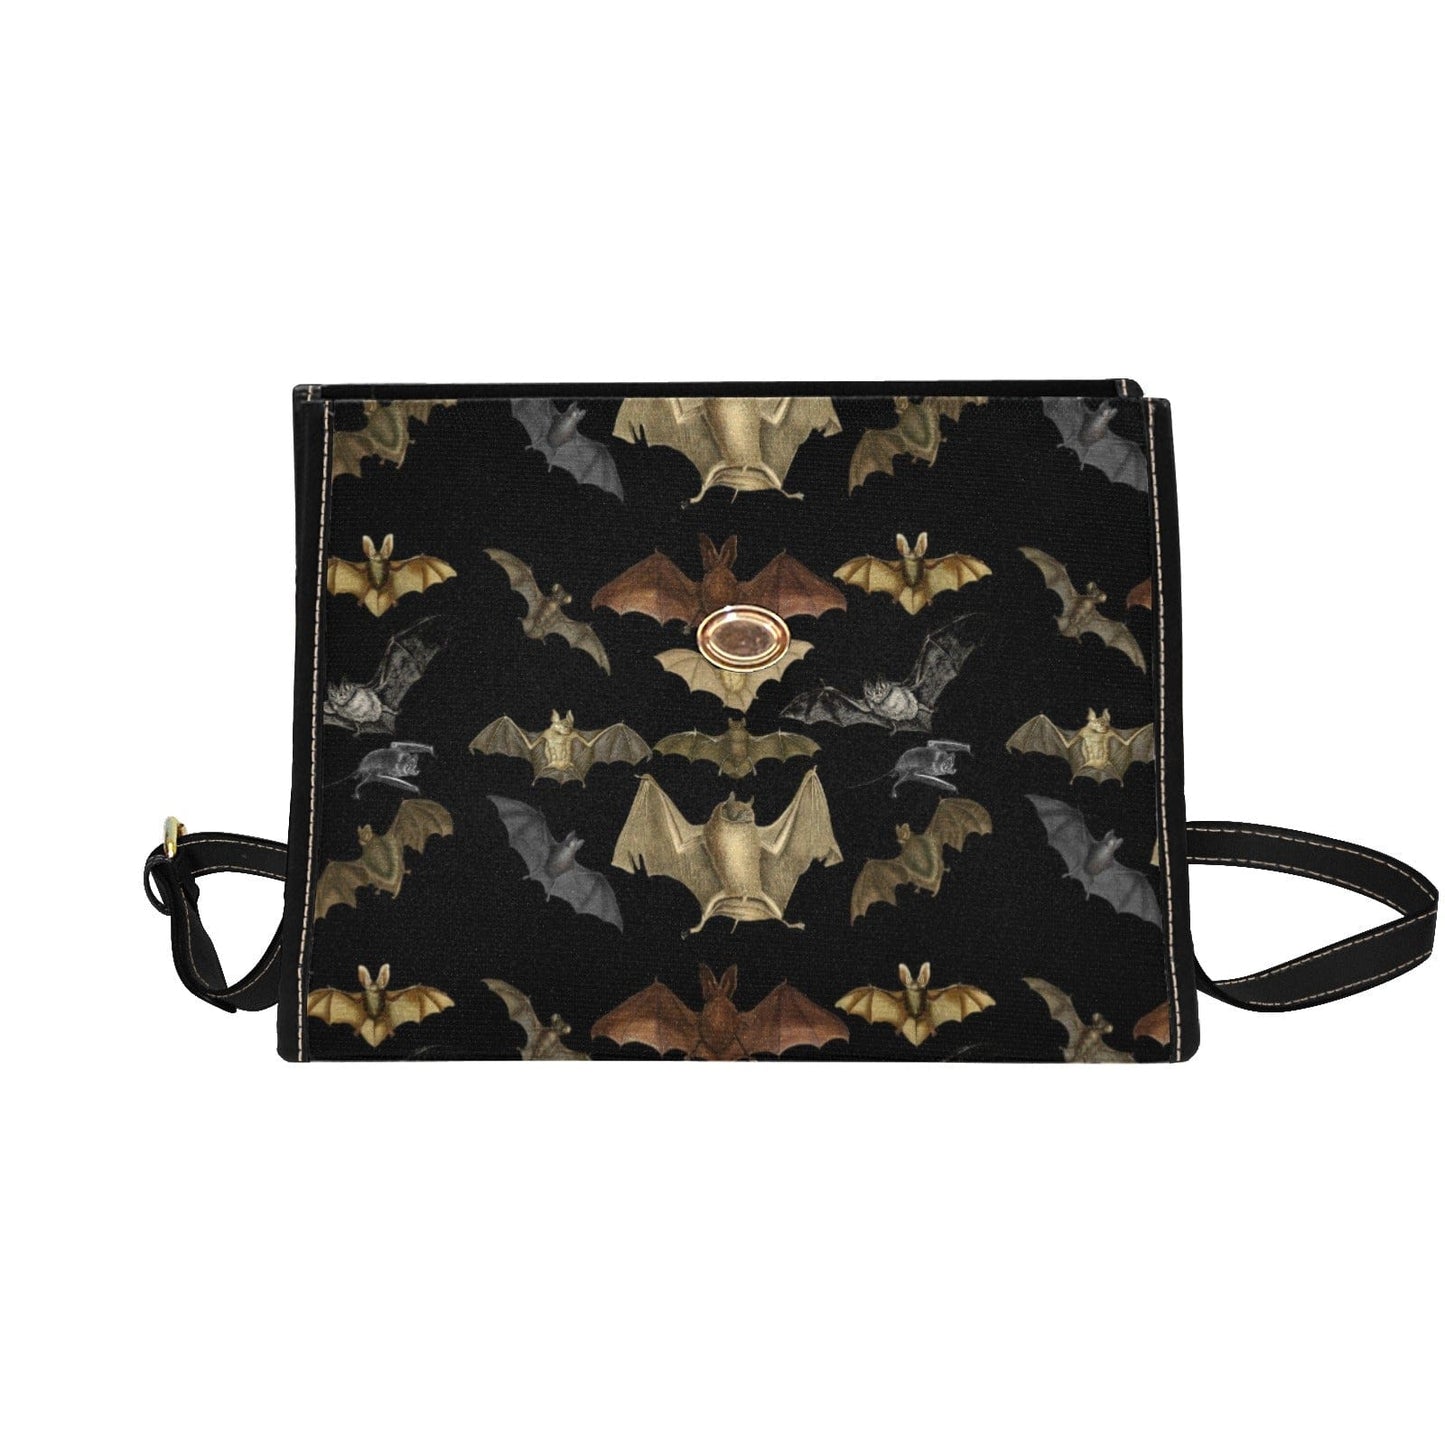 Bat Print Canvas Bag with Black Trim